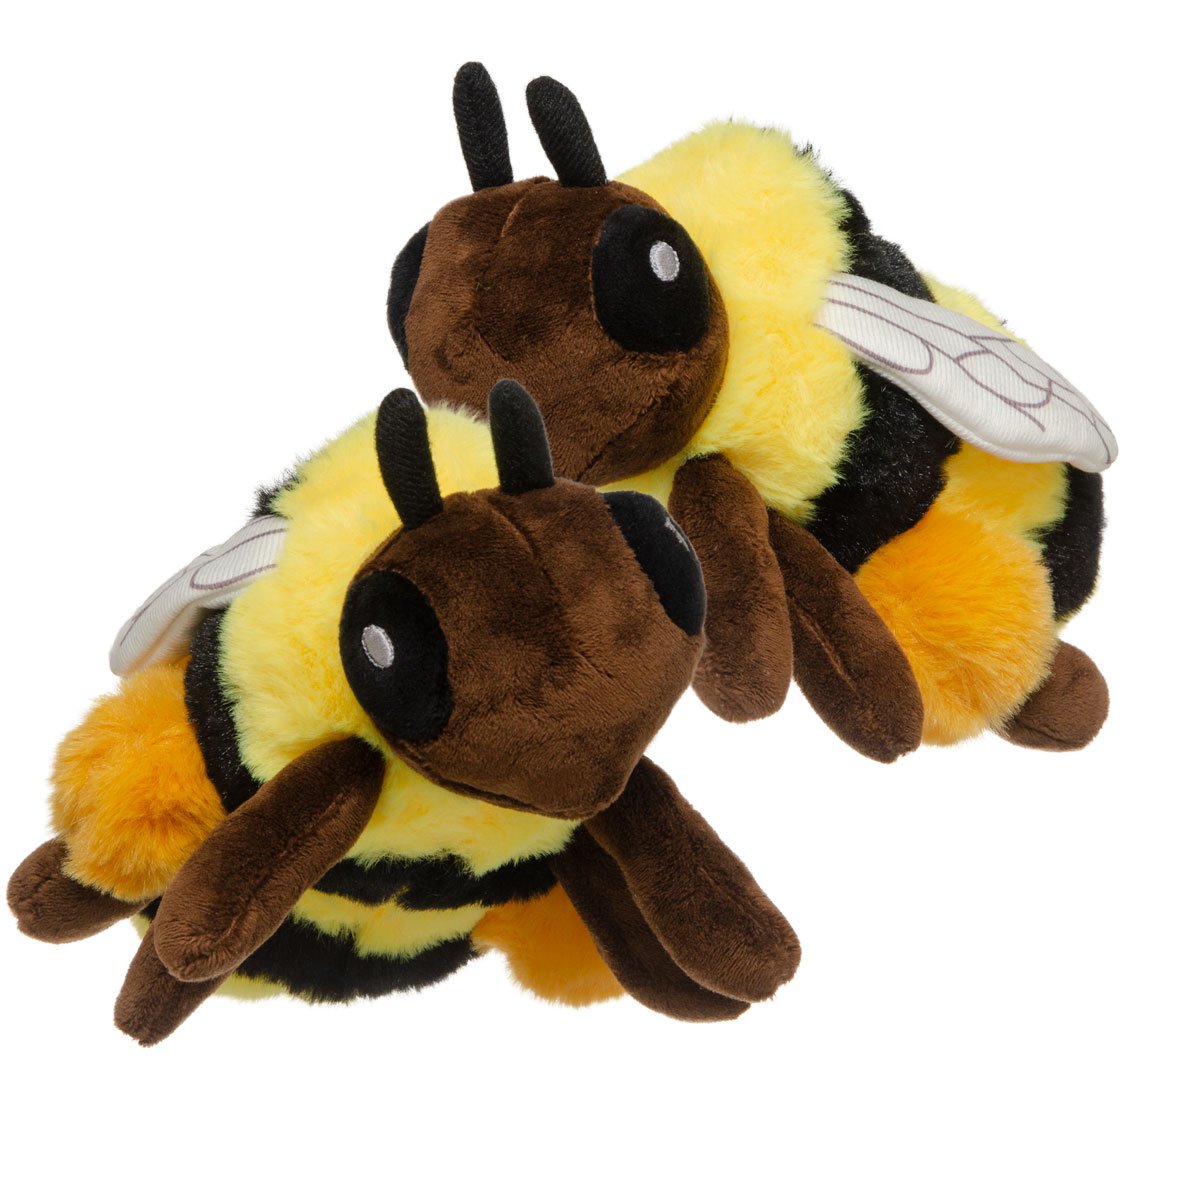 Adopt a Honeybee  Symbolic Adoptions from WWF